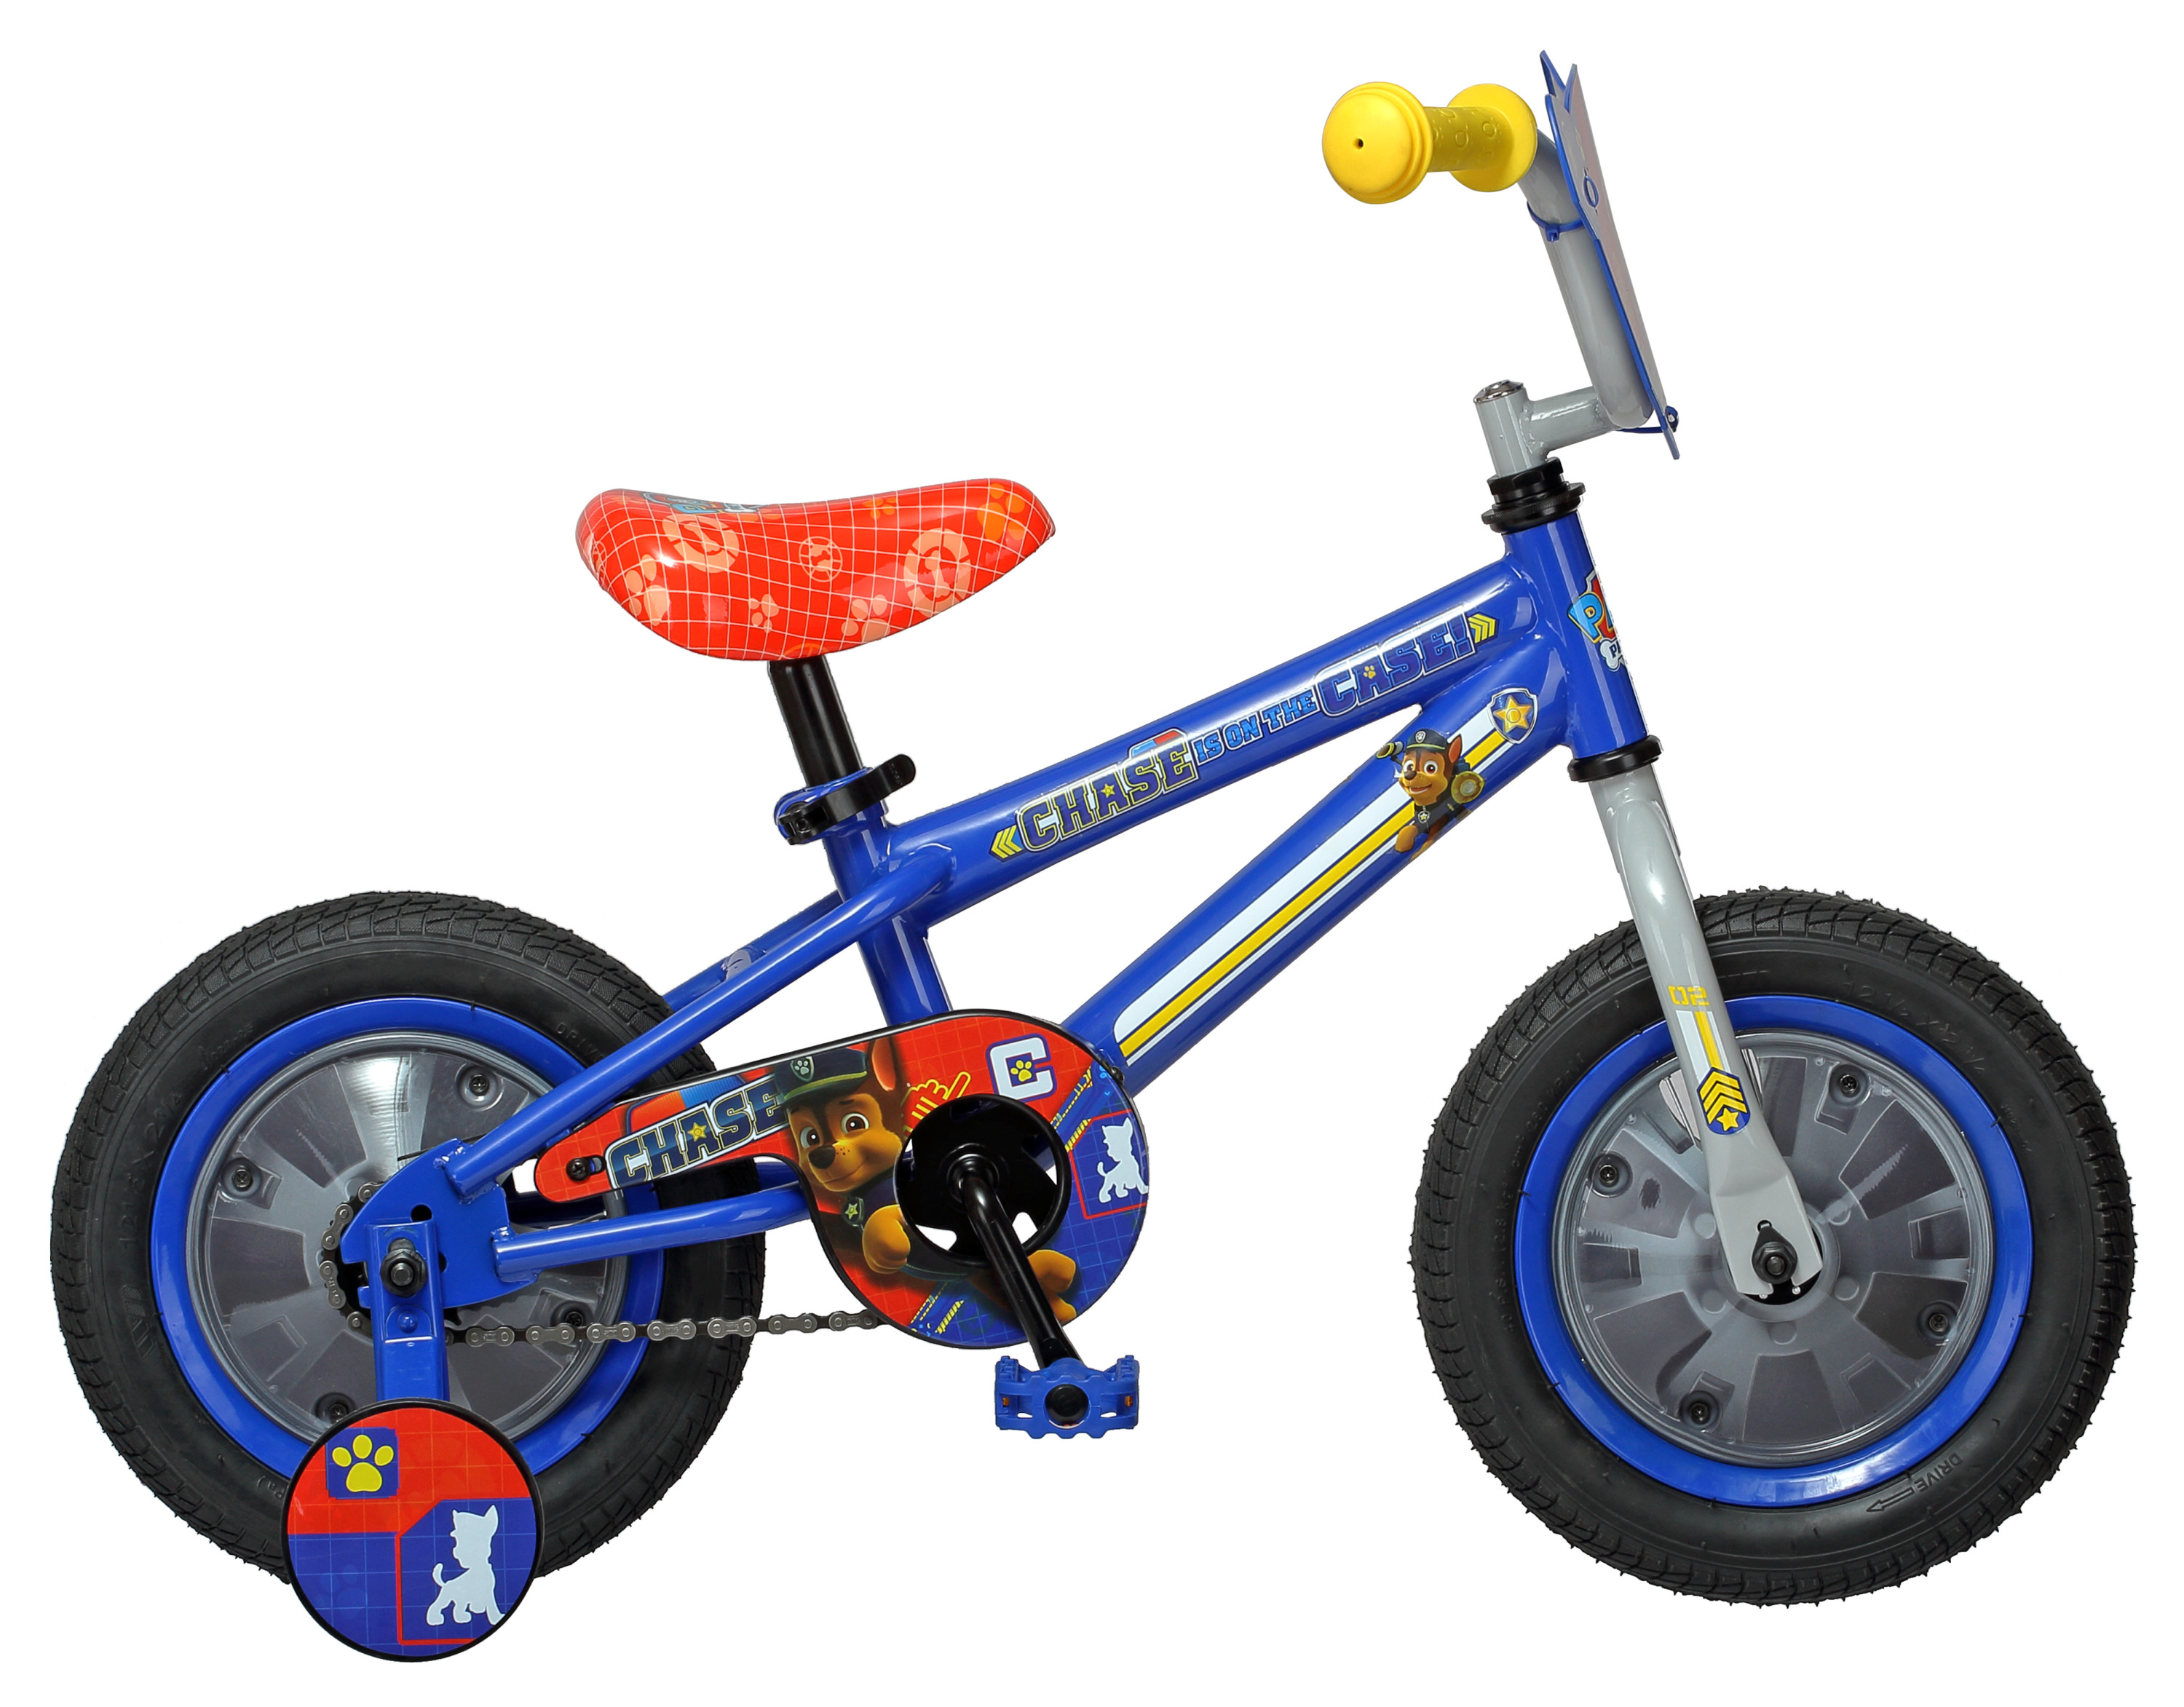 Nickelodeon's PAW Patrol: Chase Sidewalk Bike, 12-inch wheels, ages 2 - 4, blue - image 3 of 8